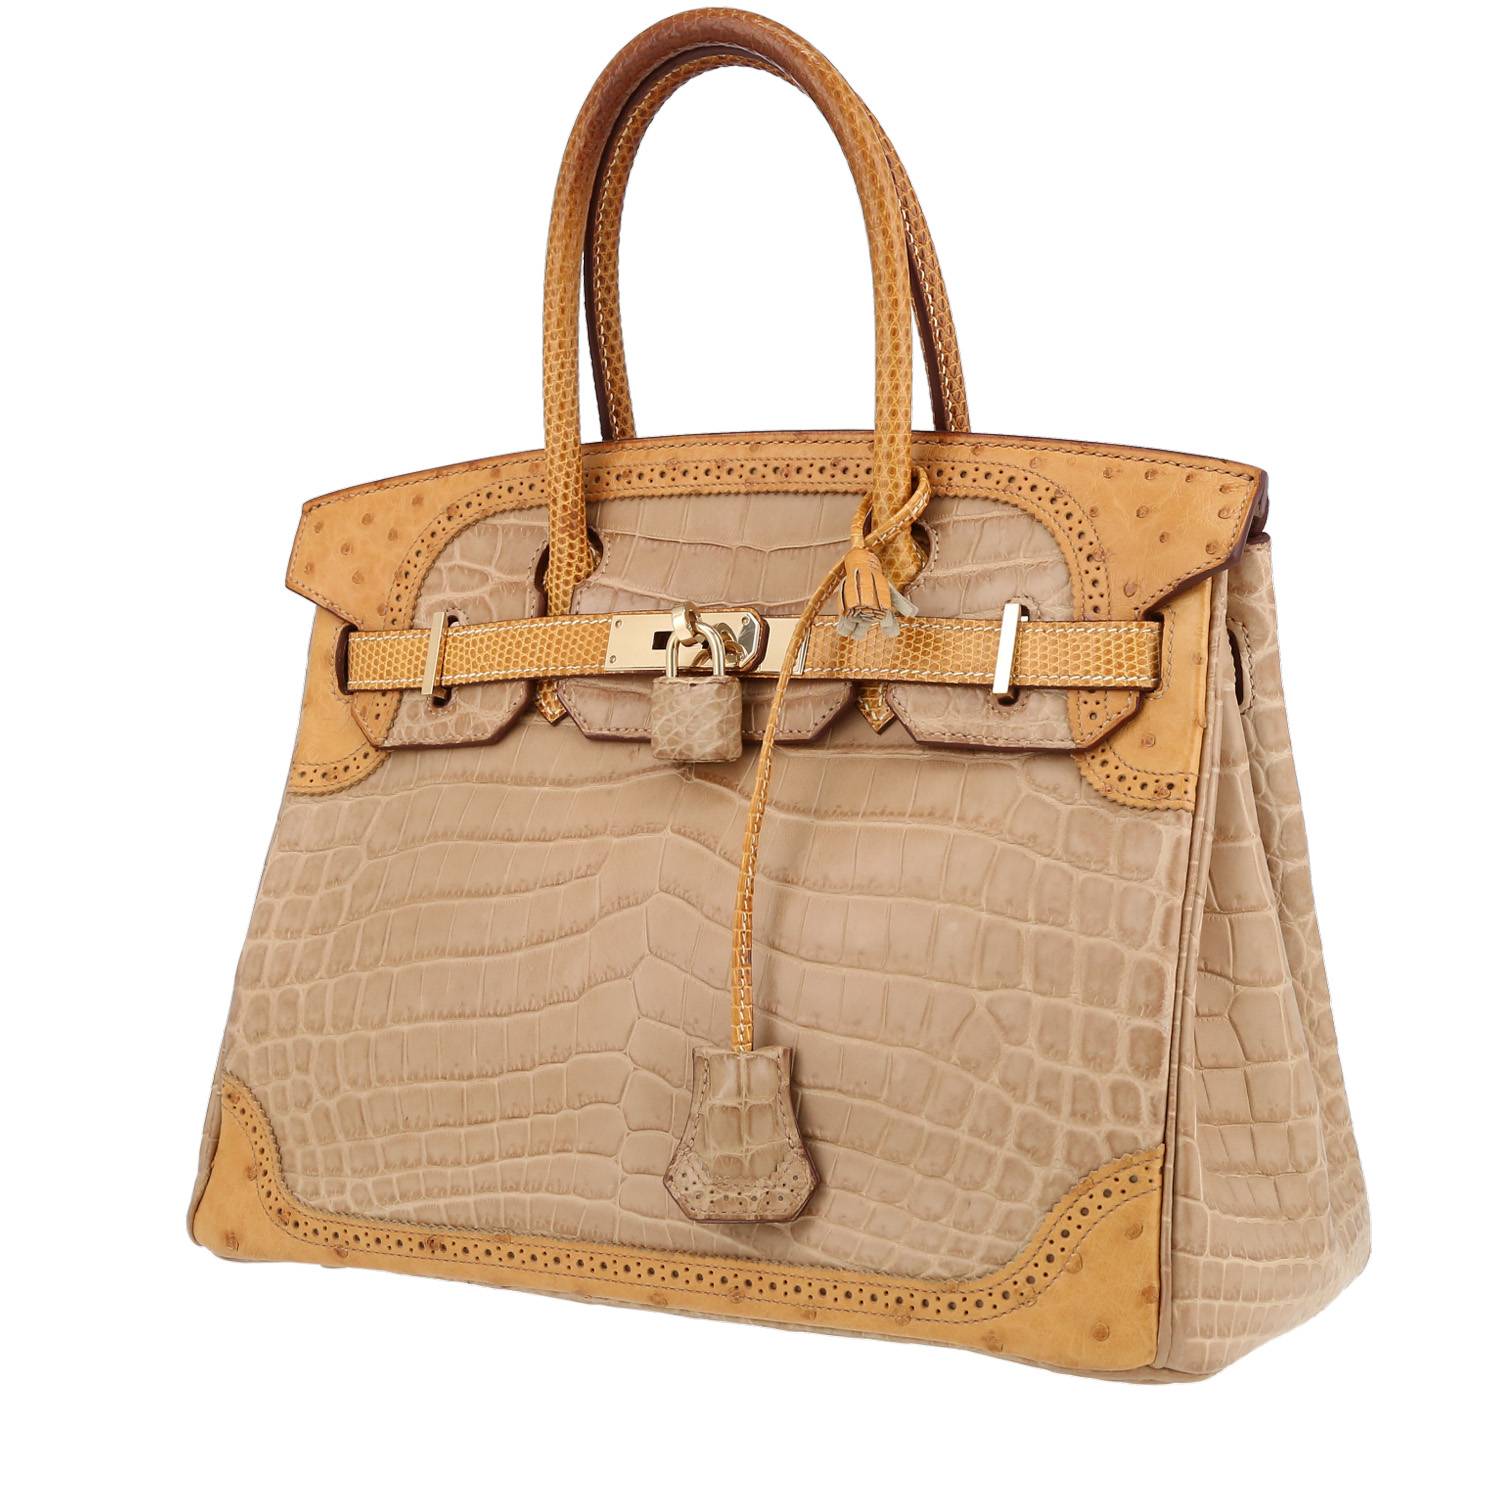 Hermès Birkin Ghillies Handbag in Poussiere Niloticus Crocodile and